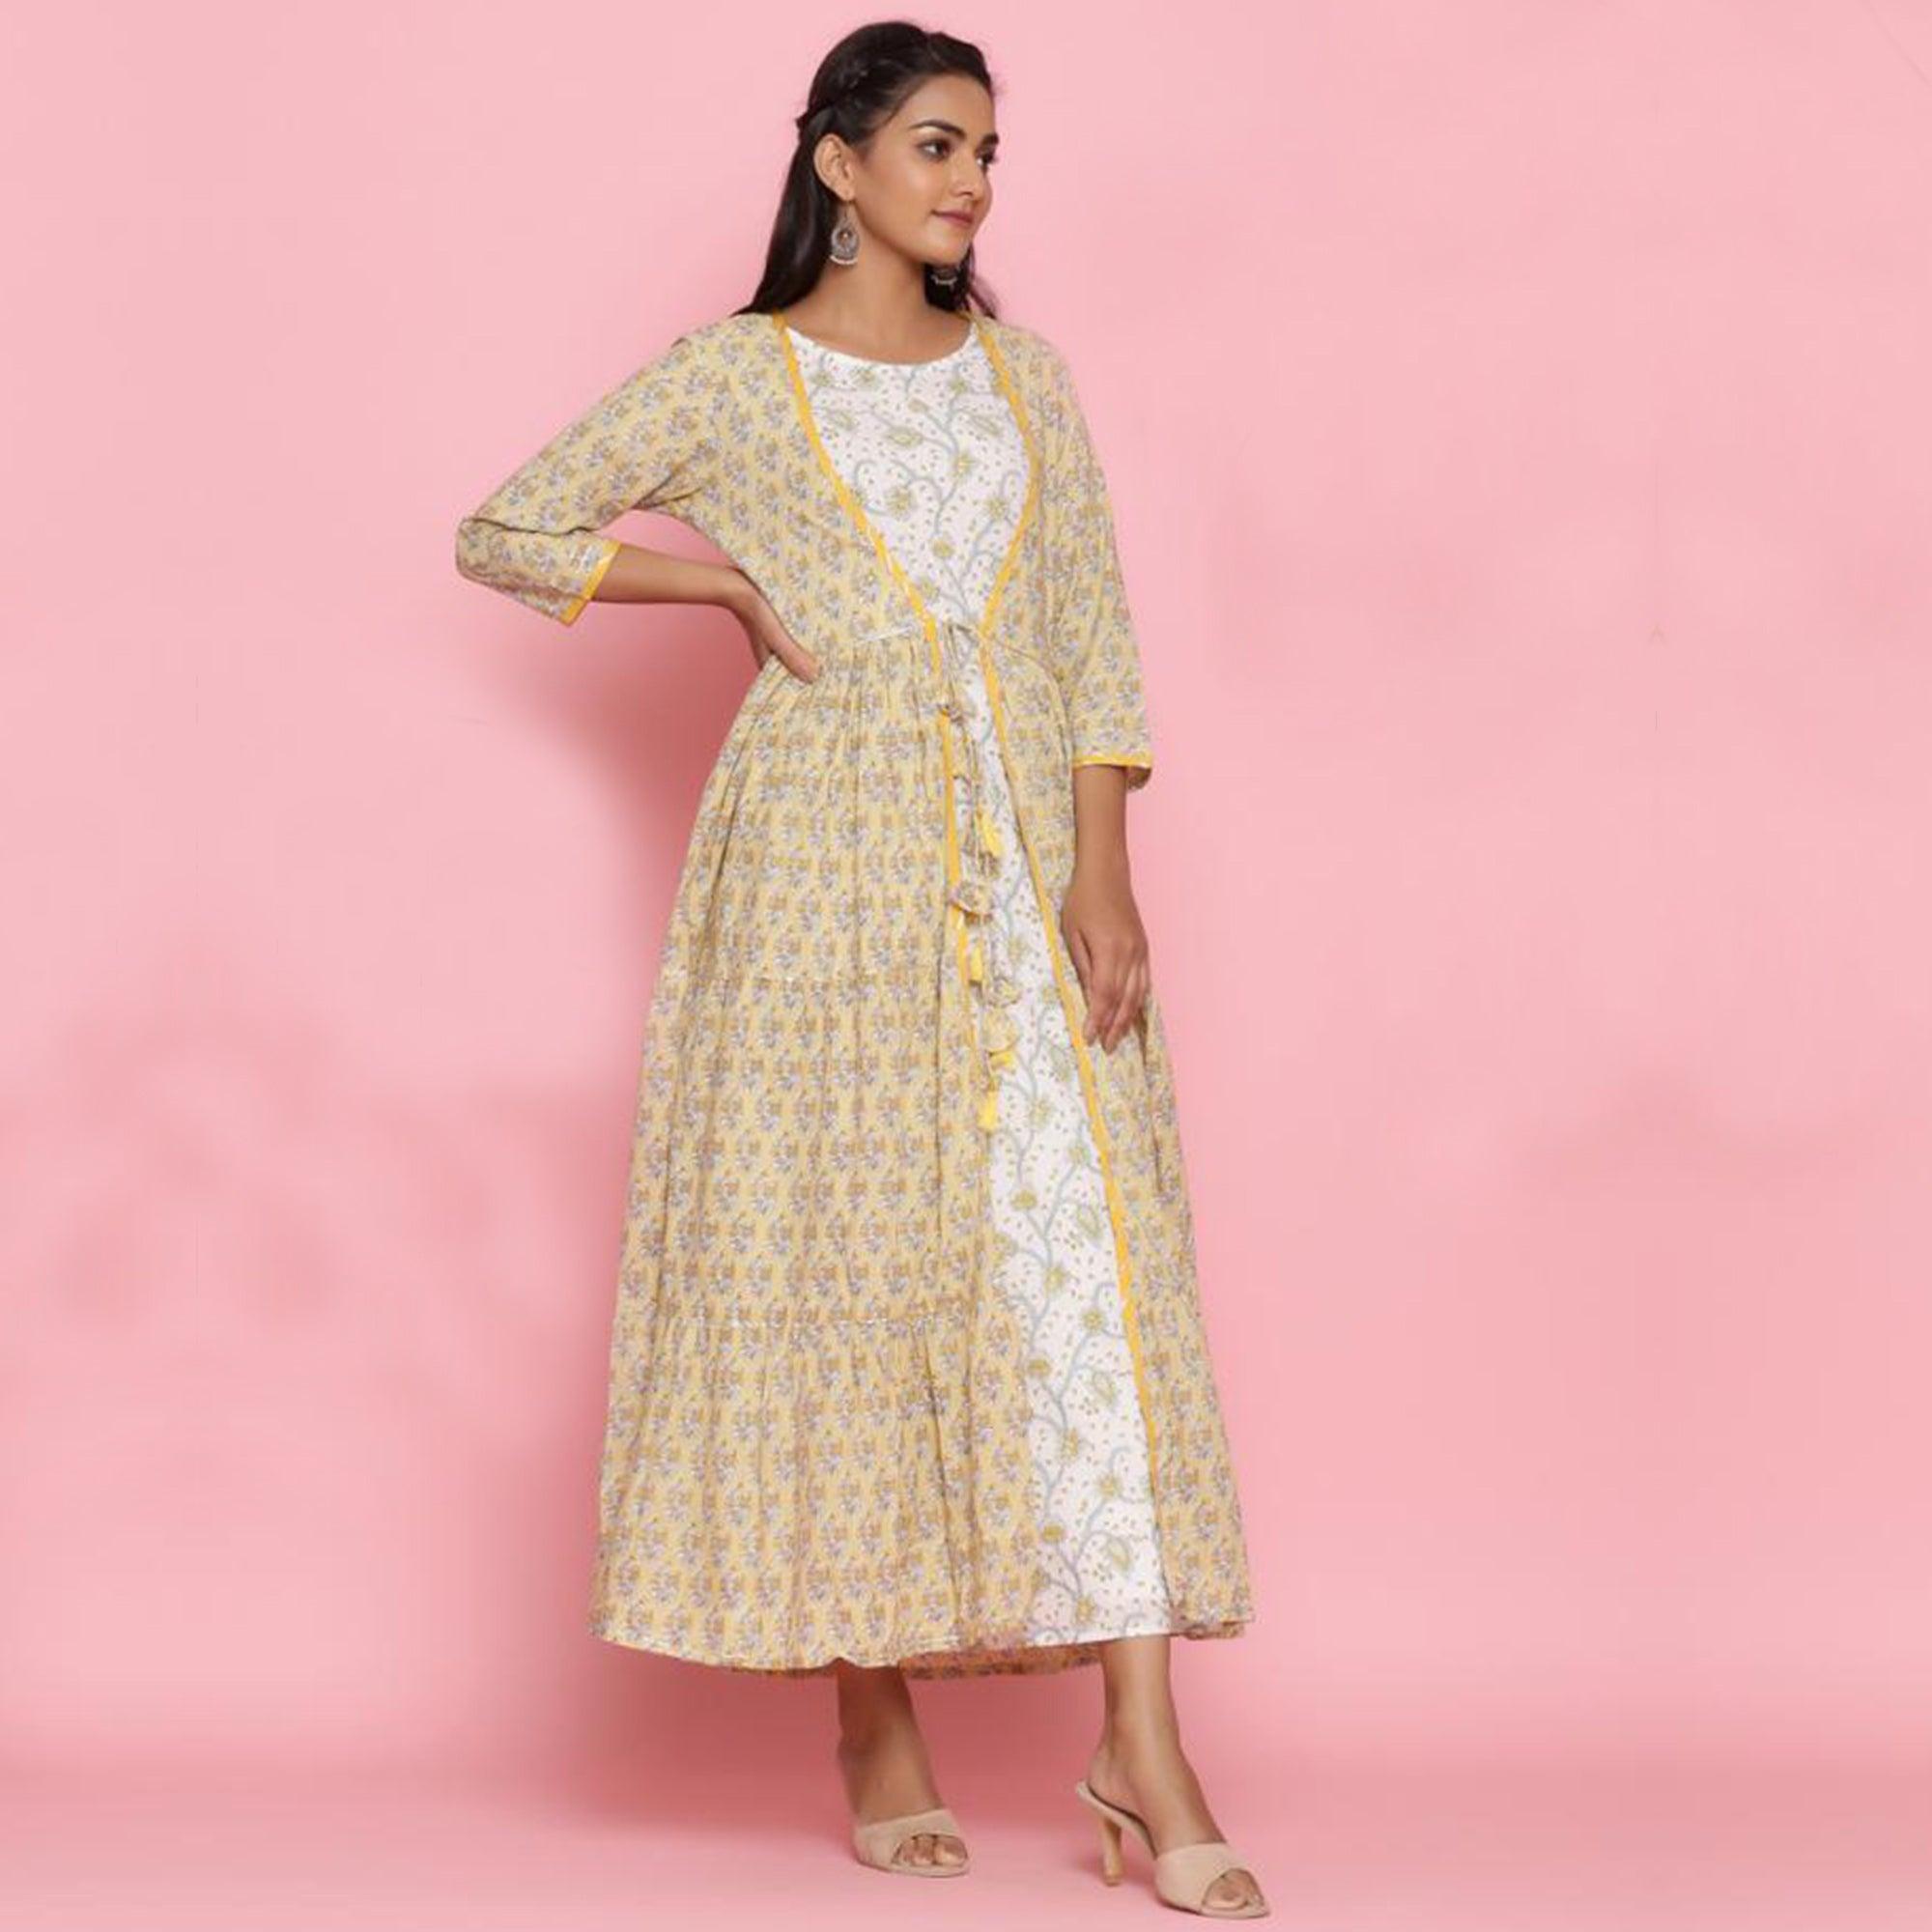 Aariya Designs - White-Beige Colored Casual Wear Printed Cotton Kurti With Jacket - Peachmode